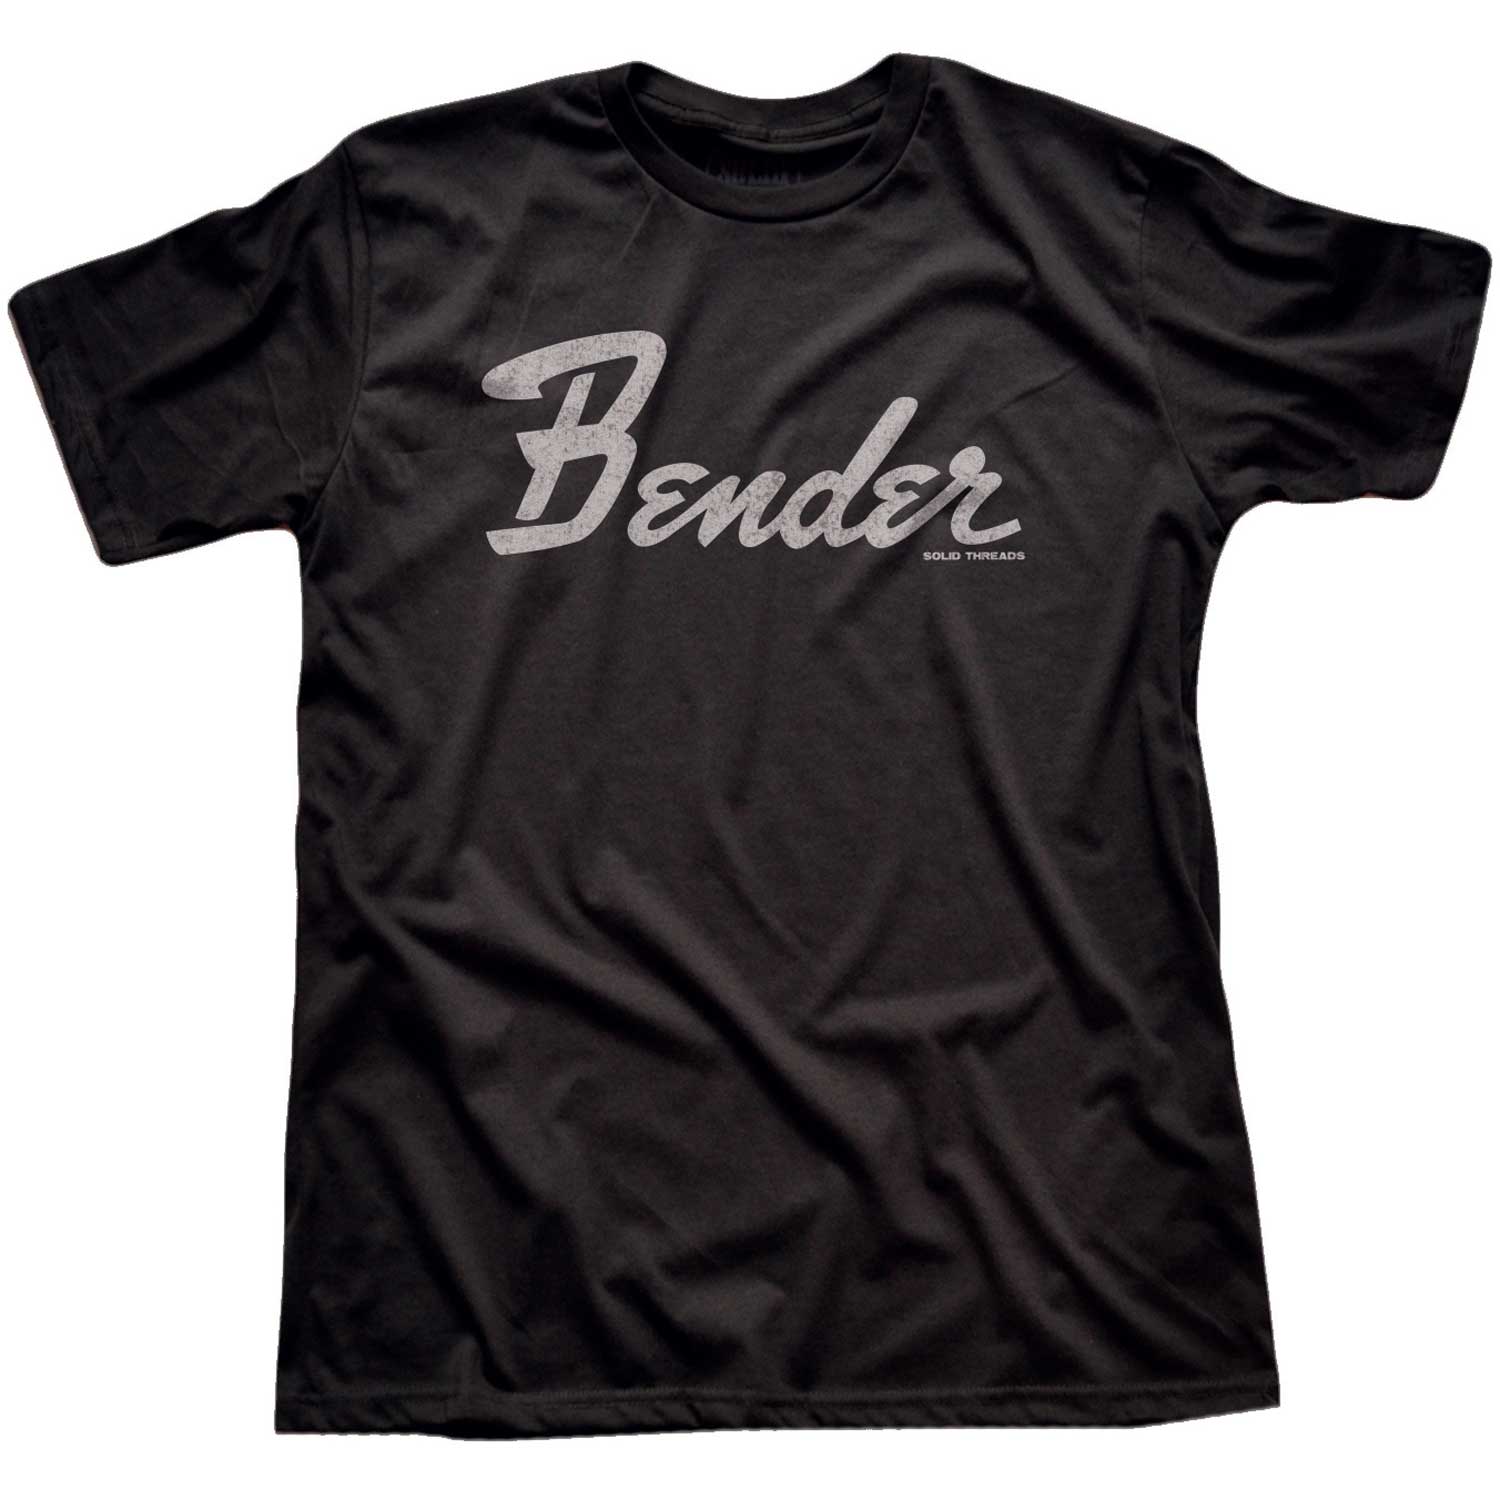 Men's Bender Vintage Graphic Tee | Retro Music T-Shirt - Solid Threads